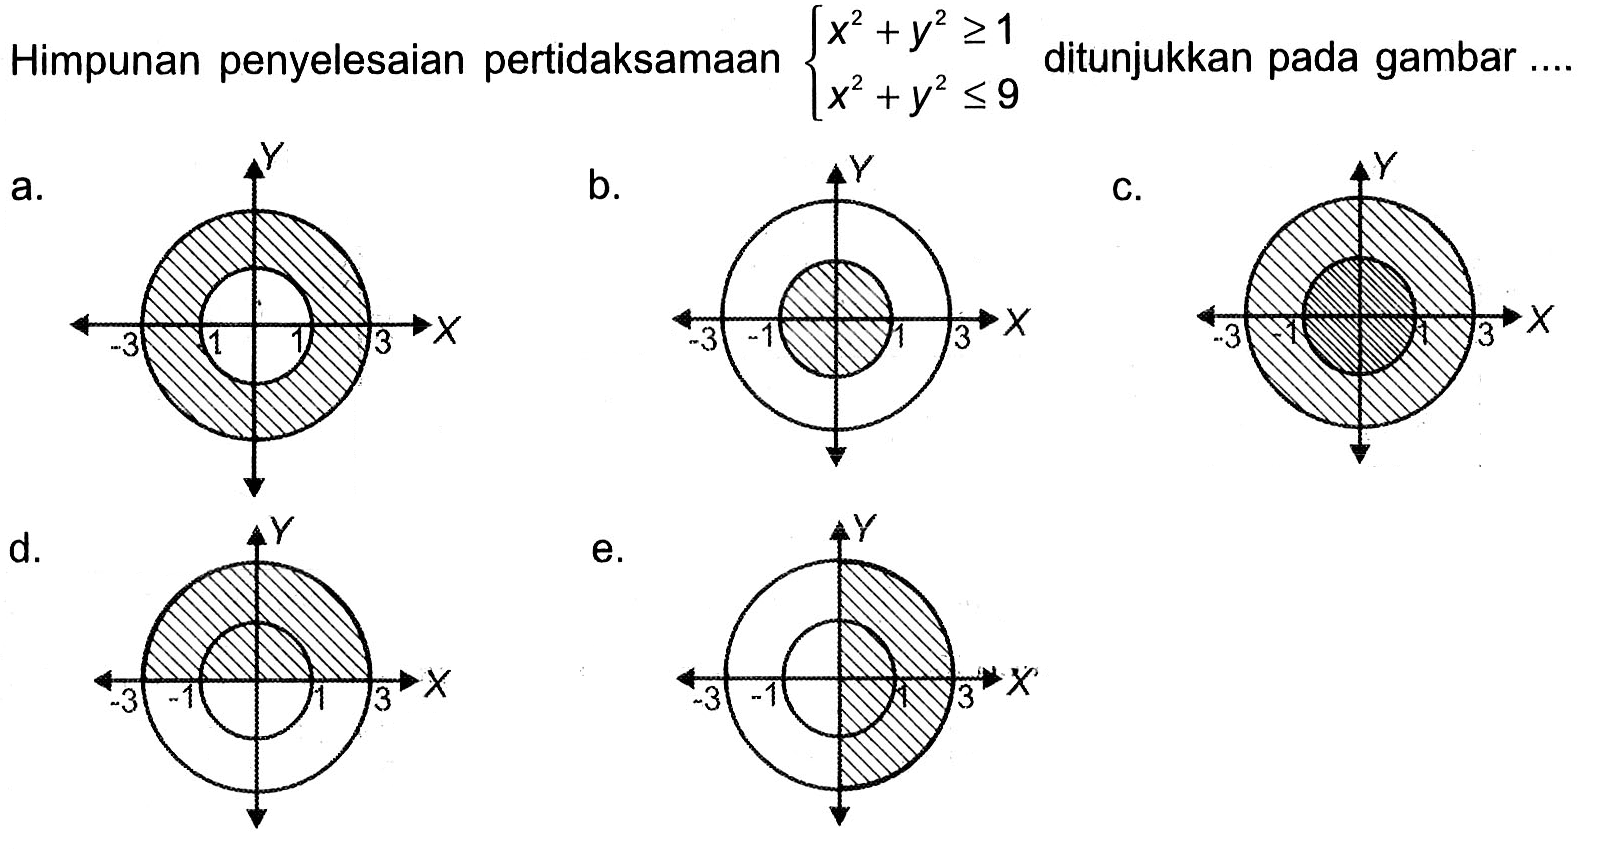 Himpunan penyelesaian pertidaksamaan ditunjukkan pada gambar x^2+y^>=21 x^2+y^2 <= 9